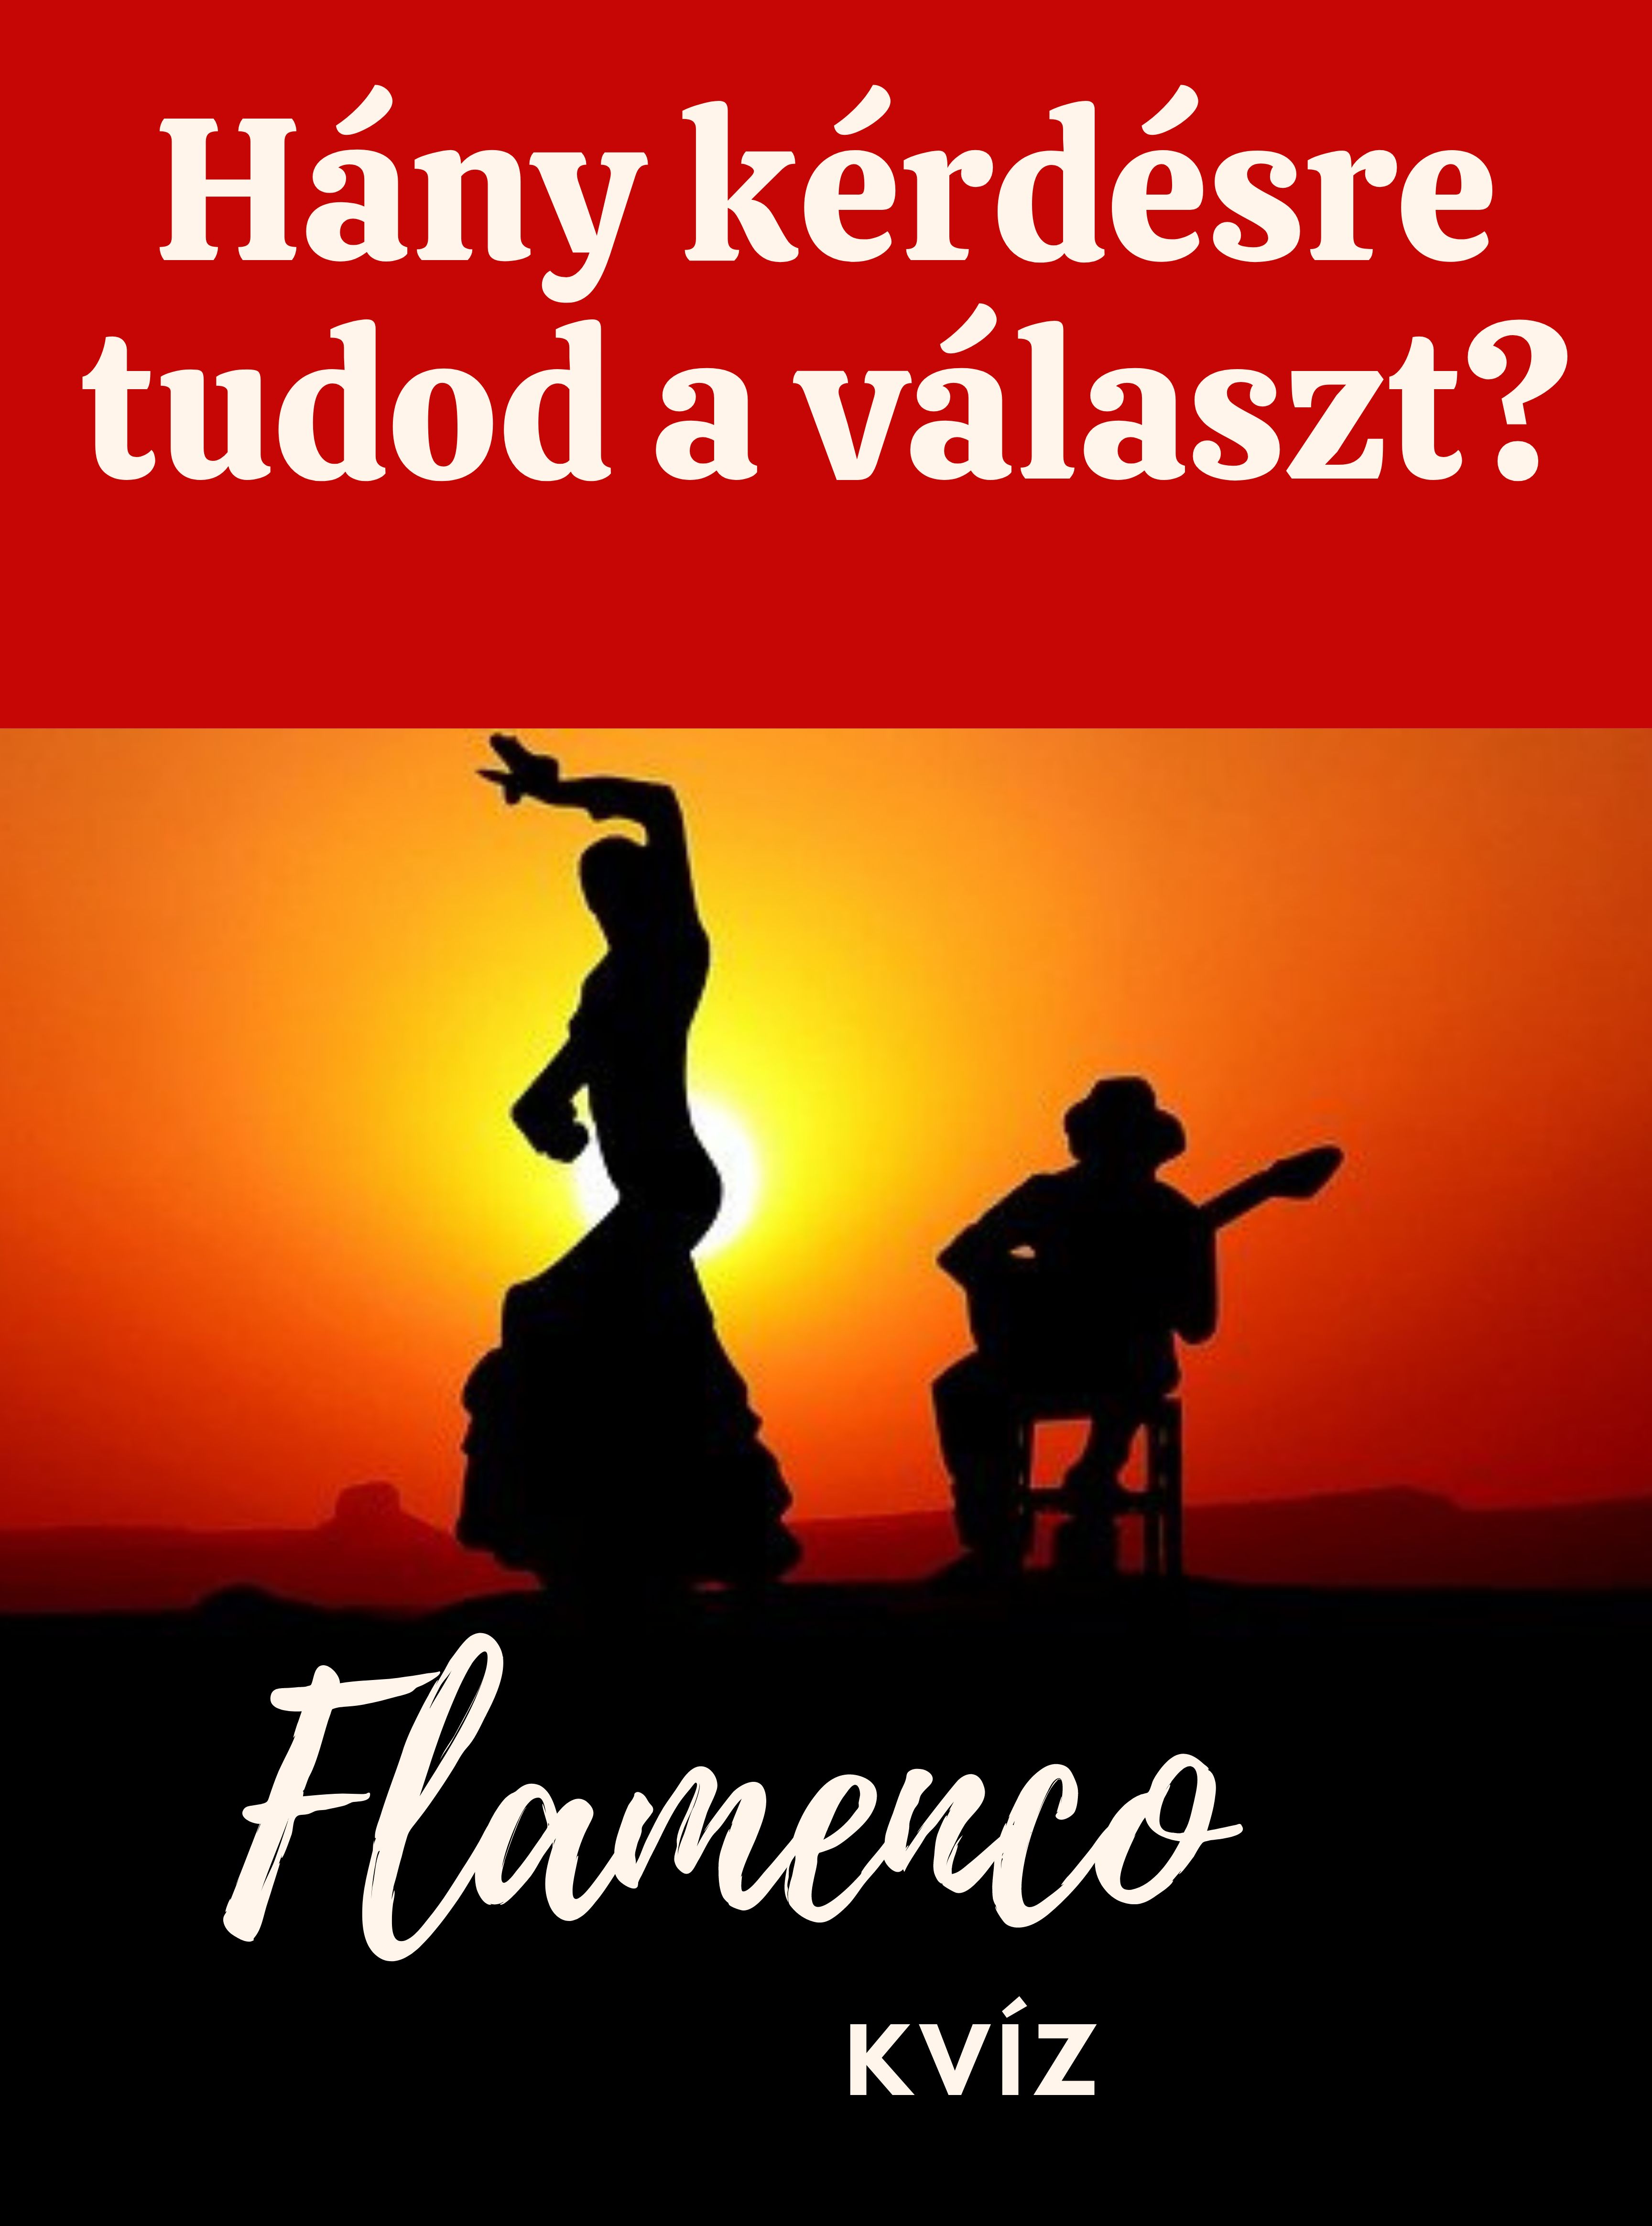 flamenco kviz banner